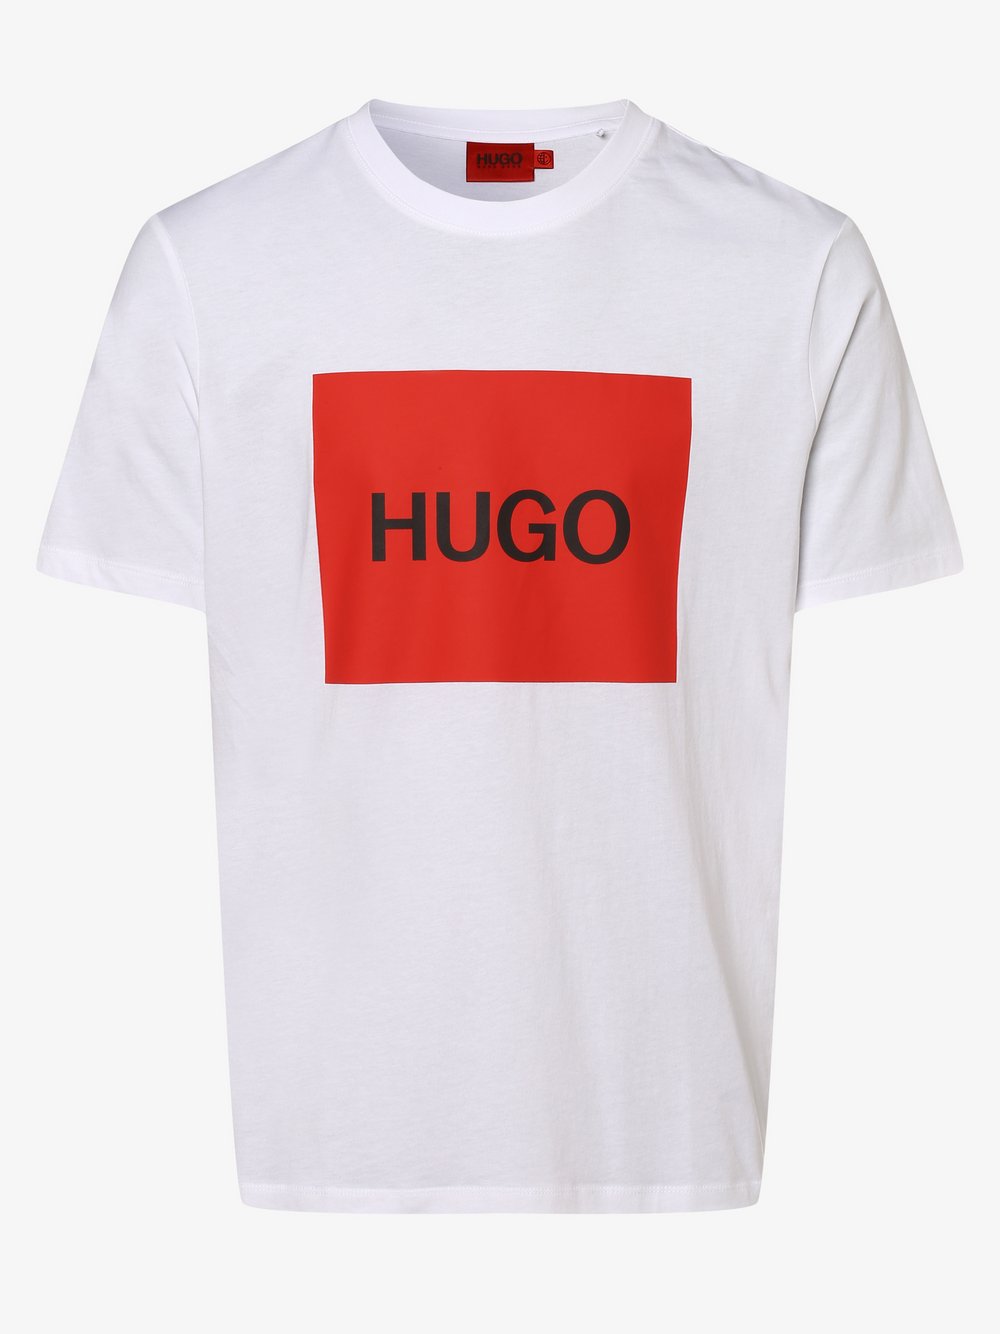 HUGO - T-shirt męski – Dulive, biały